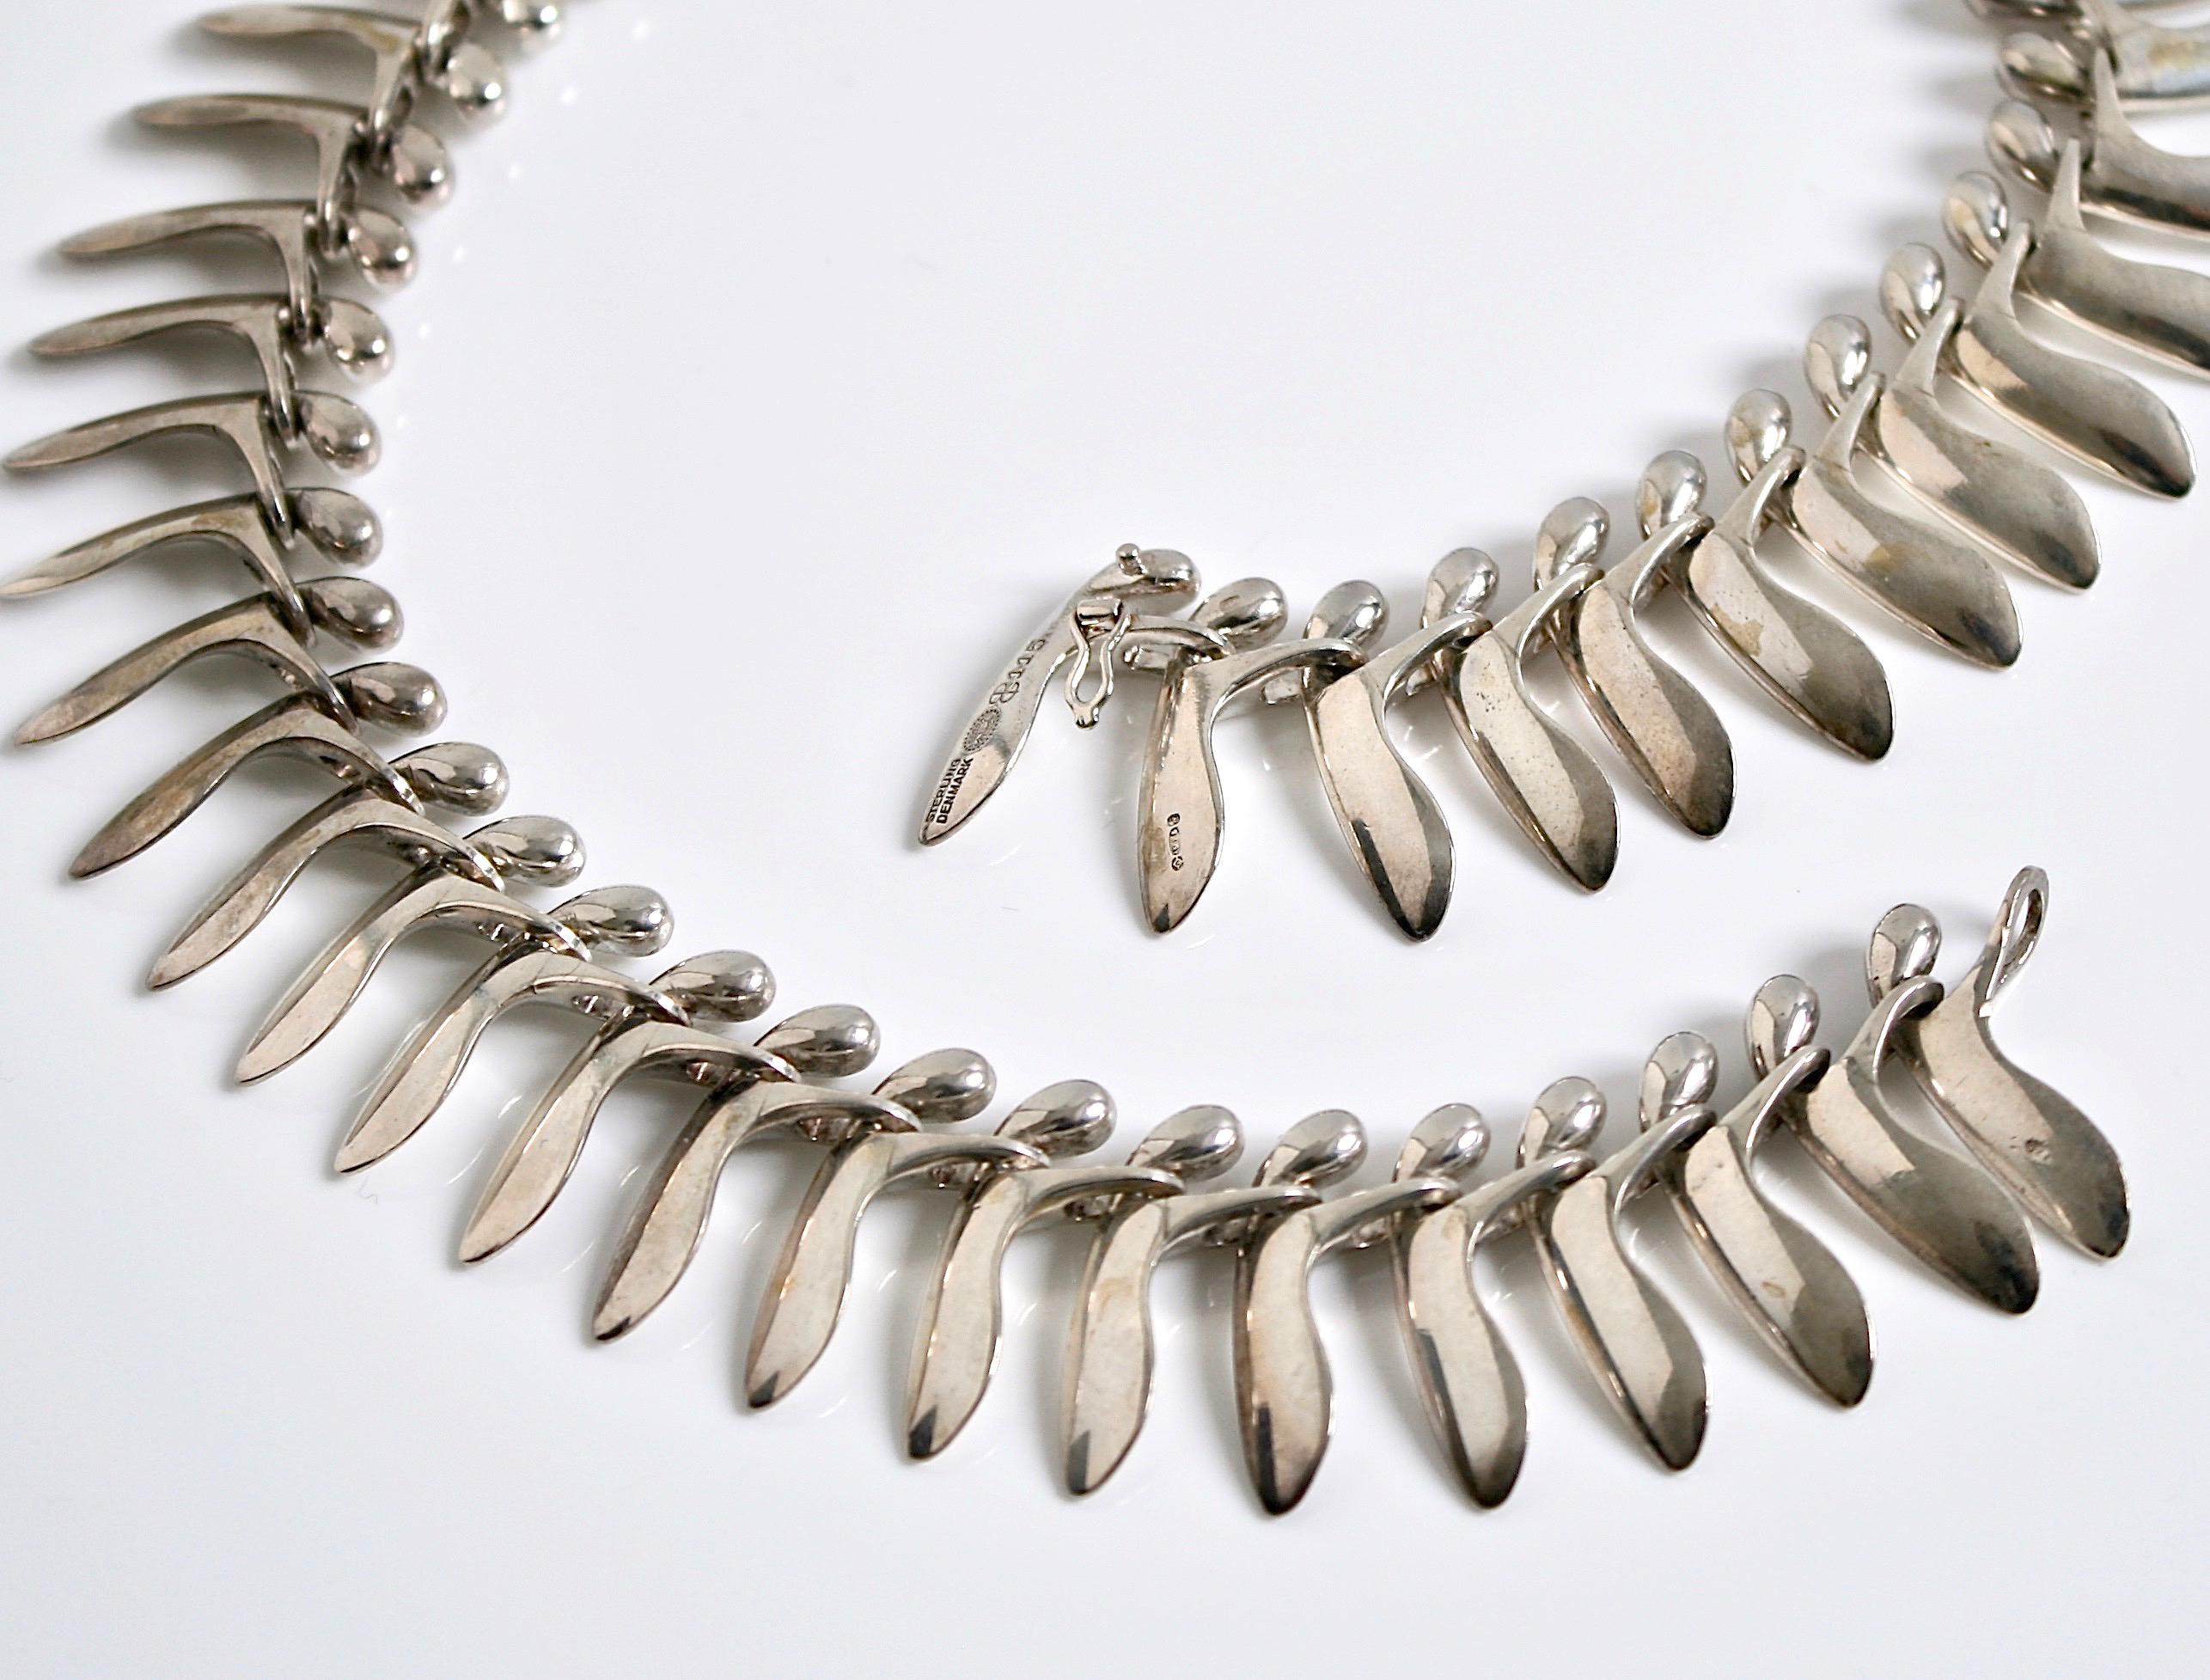 Modernist Georg Jensen Sterling Silver Necklace Designed by Bent Gabrielsen, circa 1953